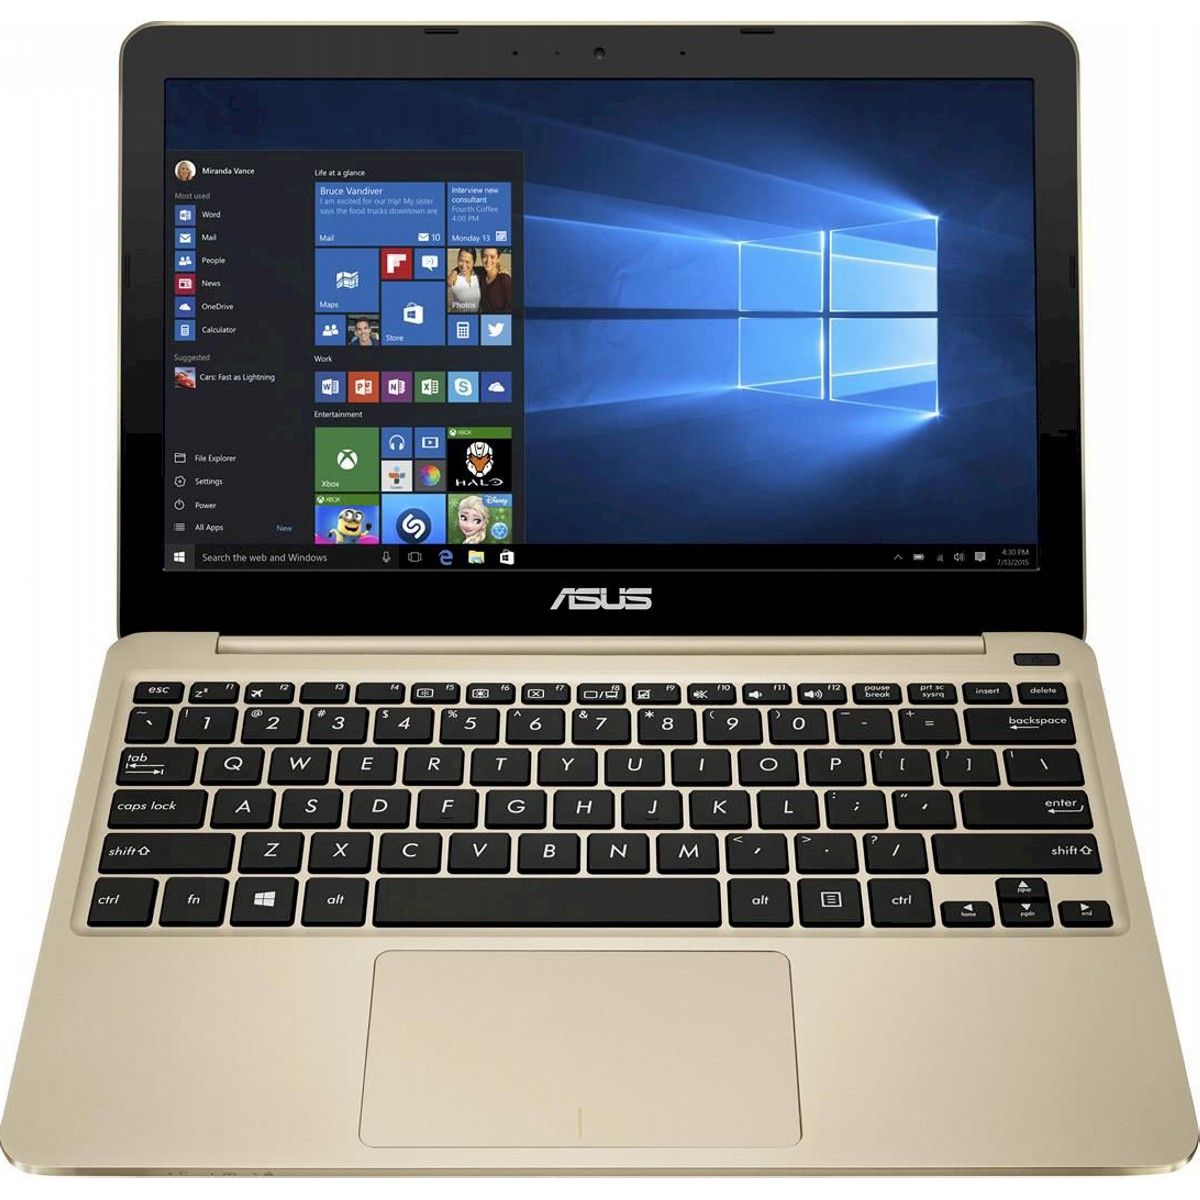 Laptop Asus X206HA, Intel Atom x5-Z8350, 2GB DDR3, Intel HD Graphics, eMMC 32GB, Windows 10